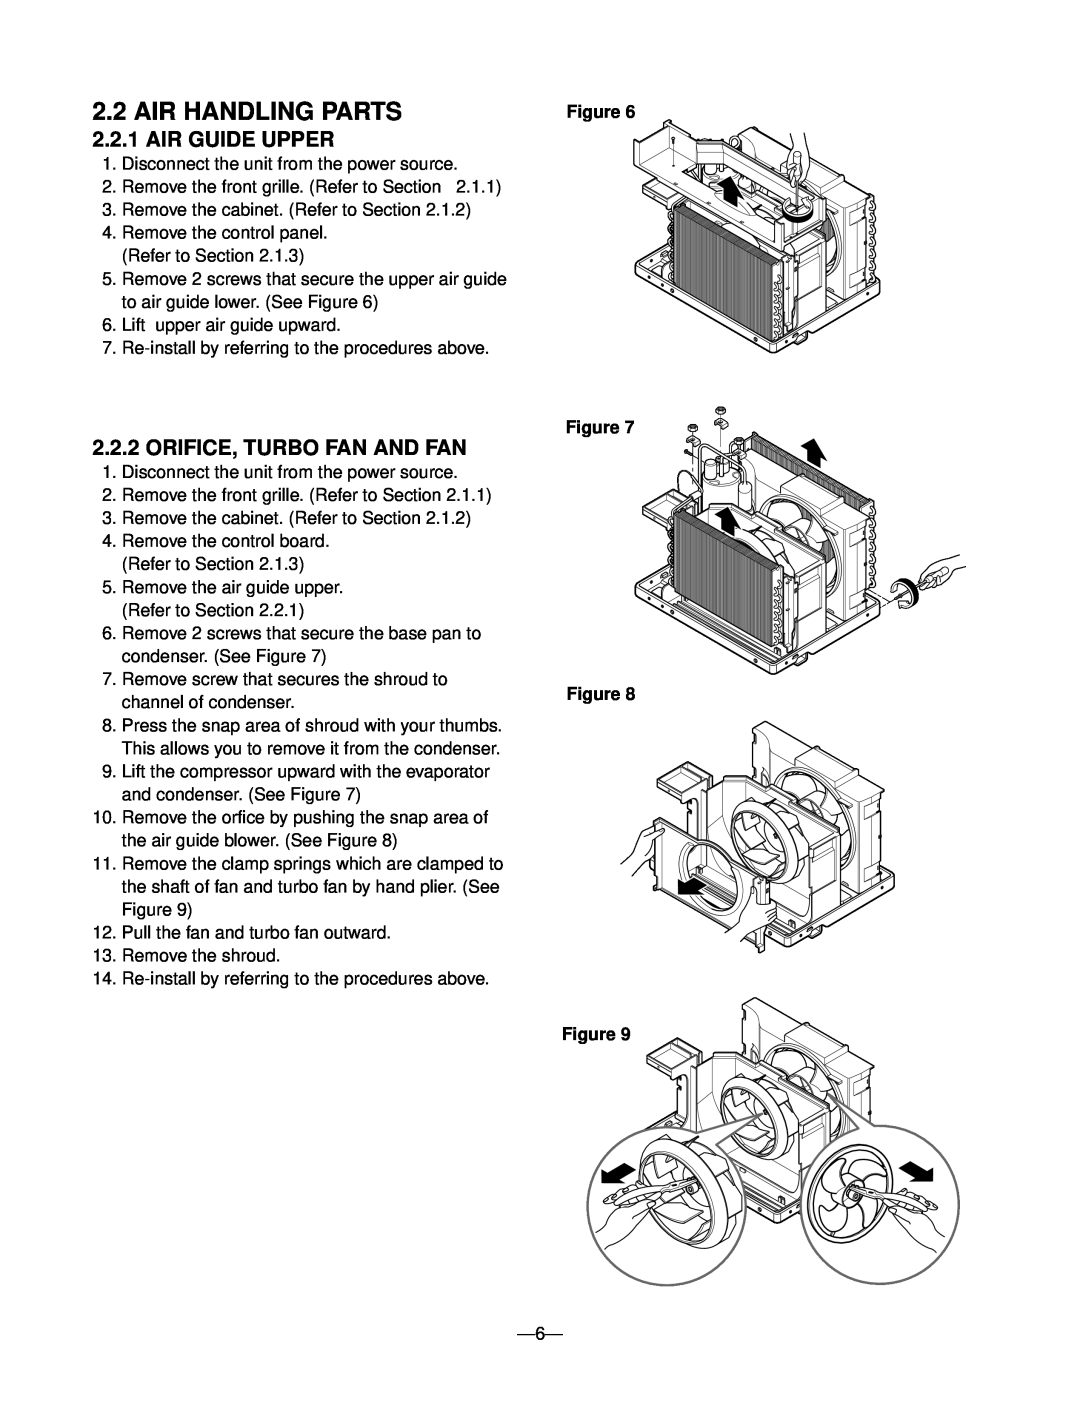 Friedrich CP05C10 manual Air Handling Parts, Air Guide Upper, Orifice, Turbo Fan And Fan, Figure Figure Figure Figure 